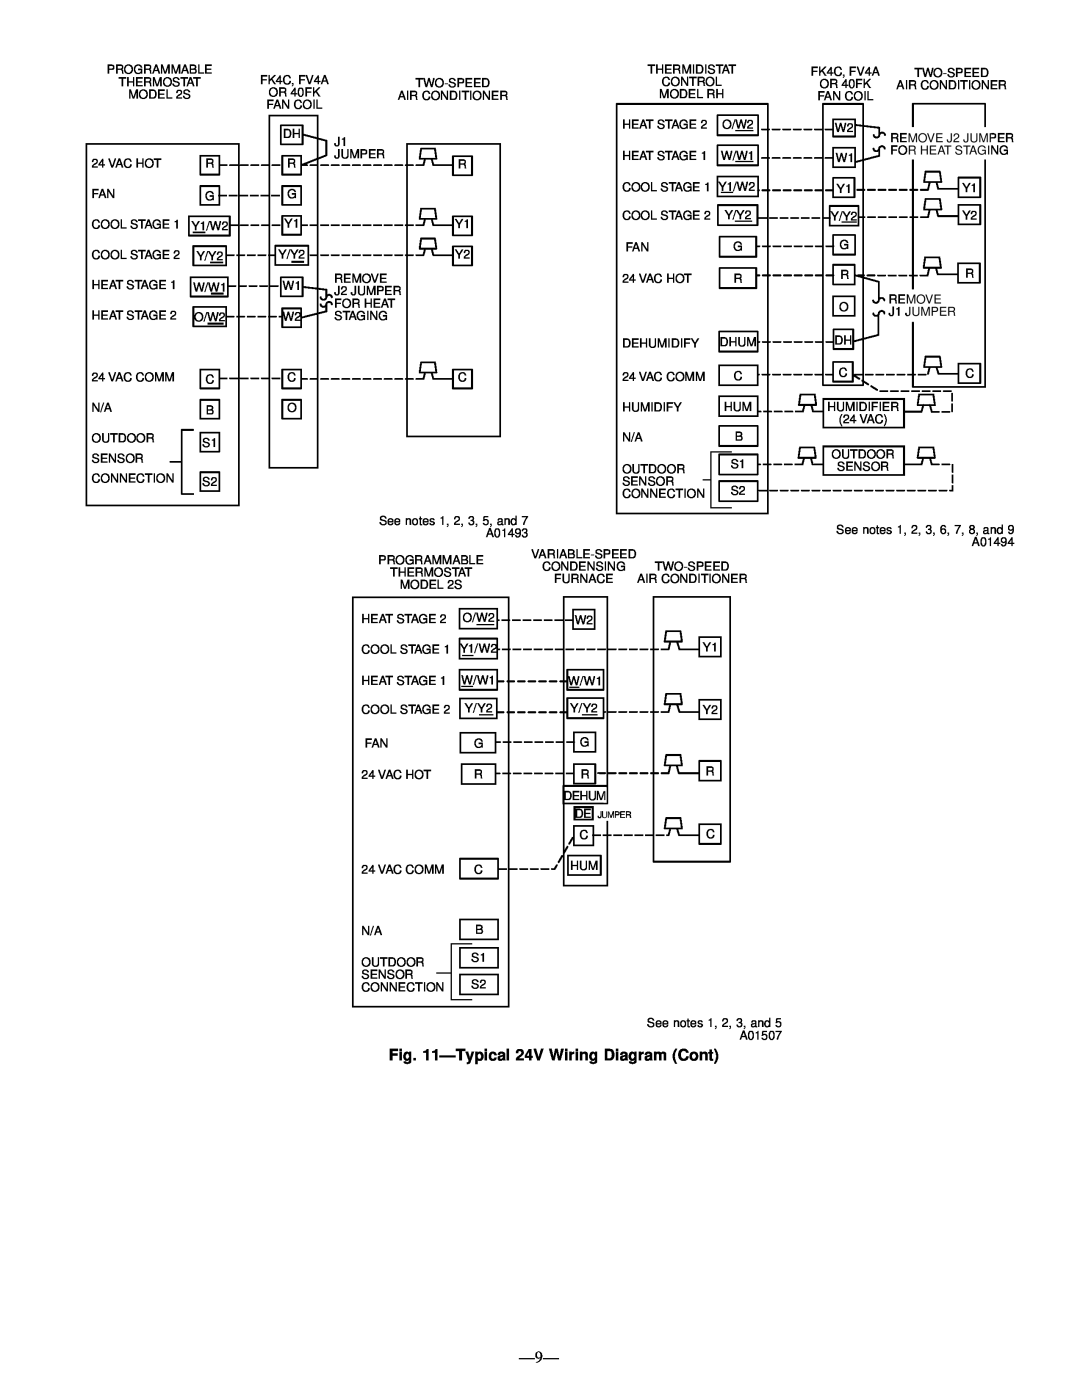 Bryant 598B instruction manual Typical 24V Wiring Diagram Cont, De Jumper 